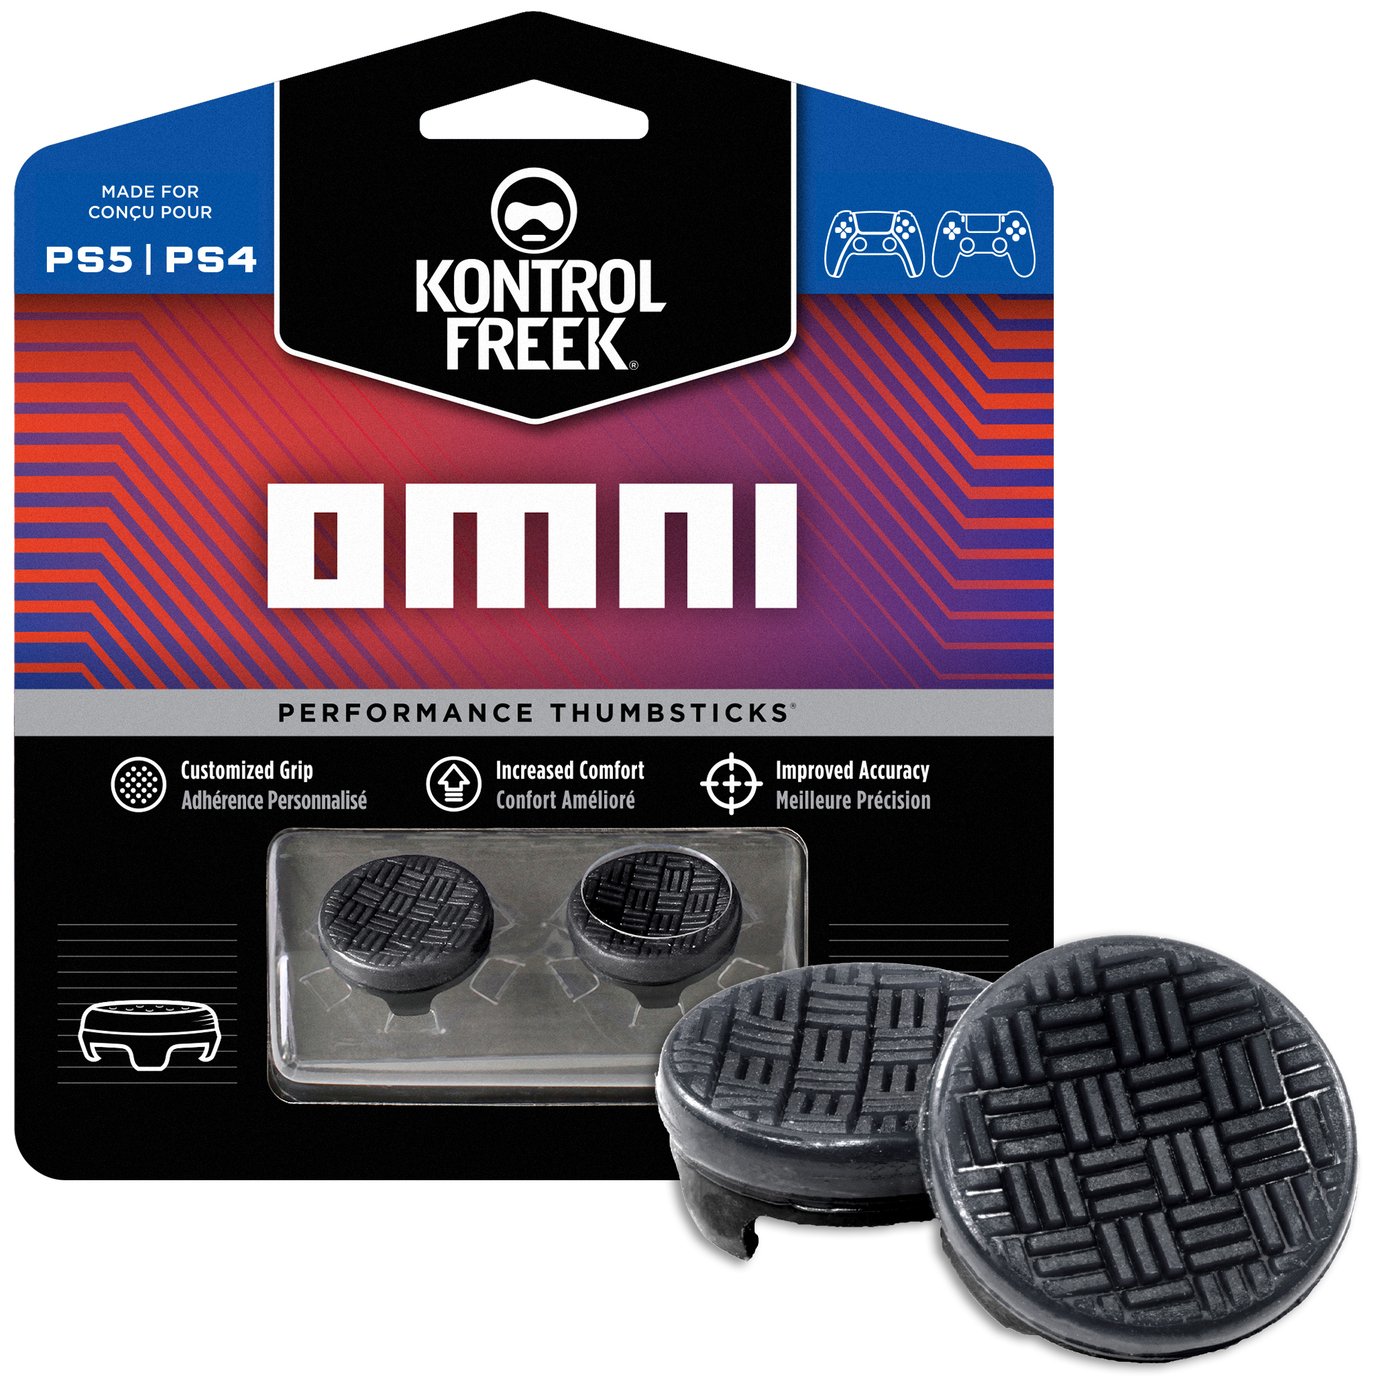 KontrolFreek Omni PS4 Performance Thumbsticks Review